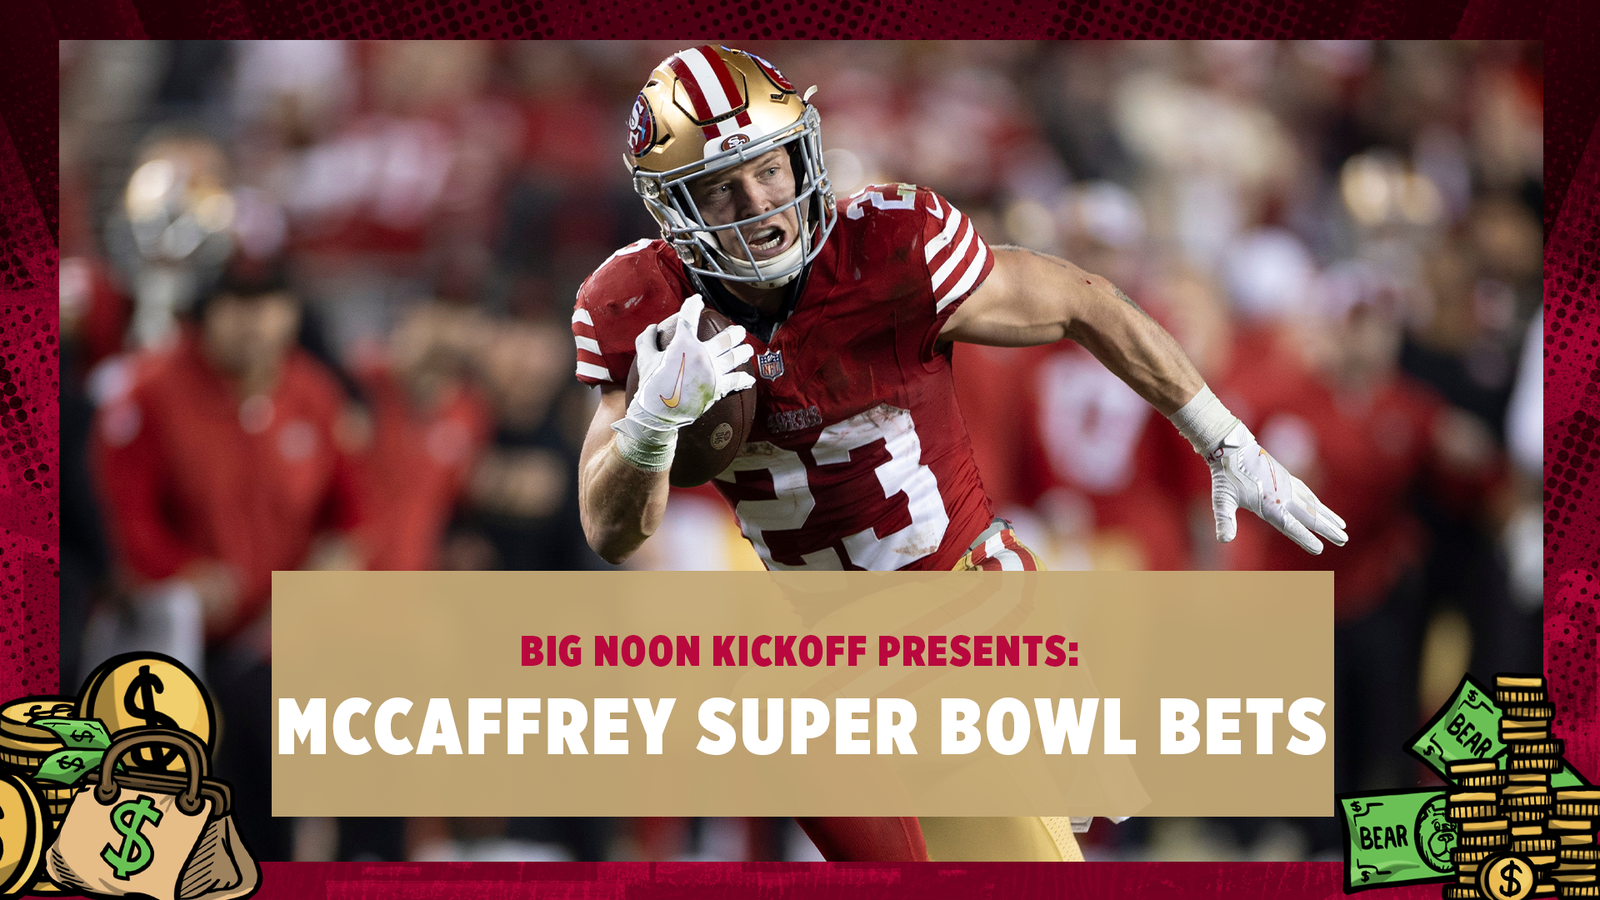 Christian McCaffrey Super Bowl prop bets, gambling odds and best picks 